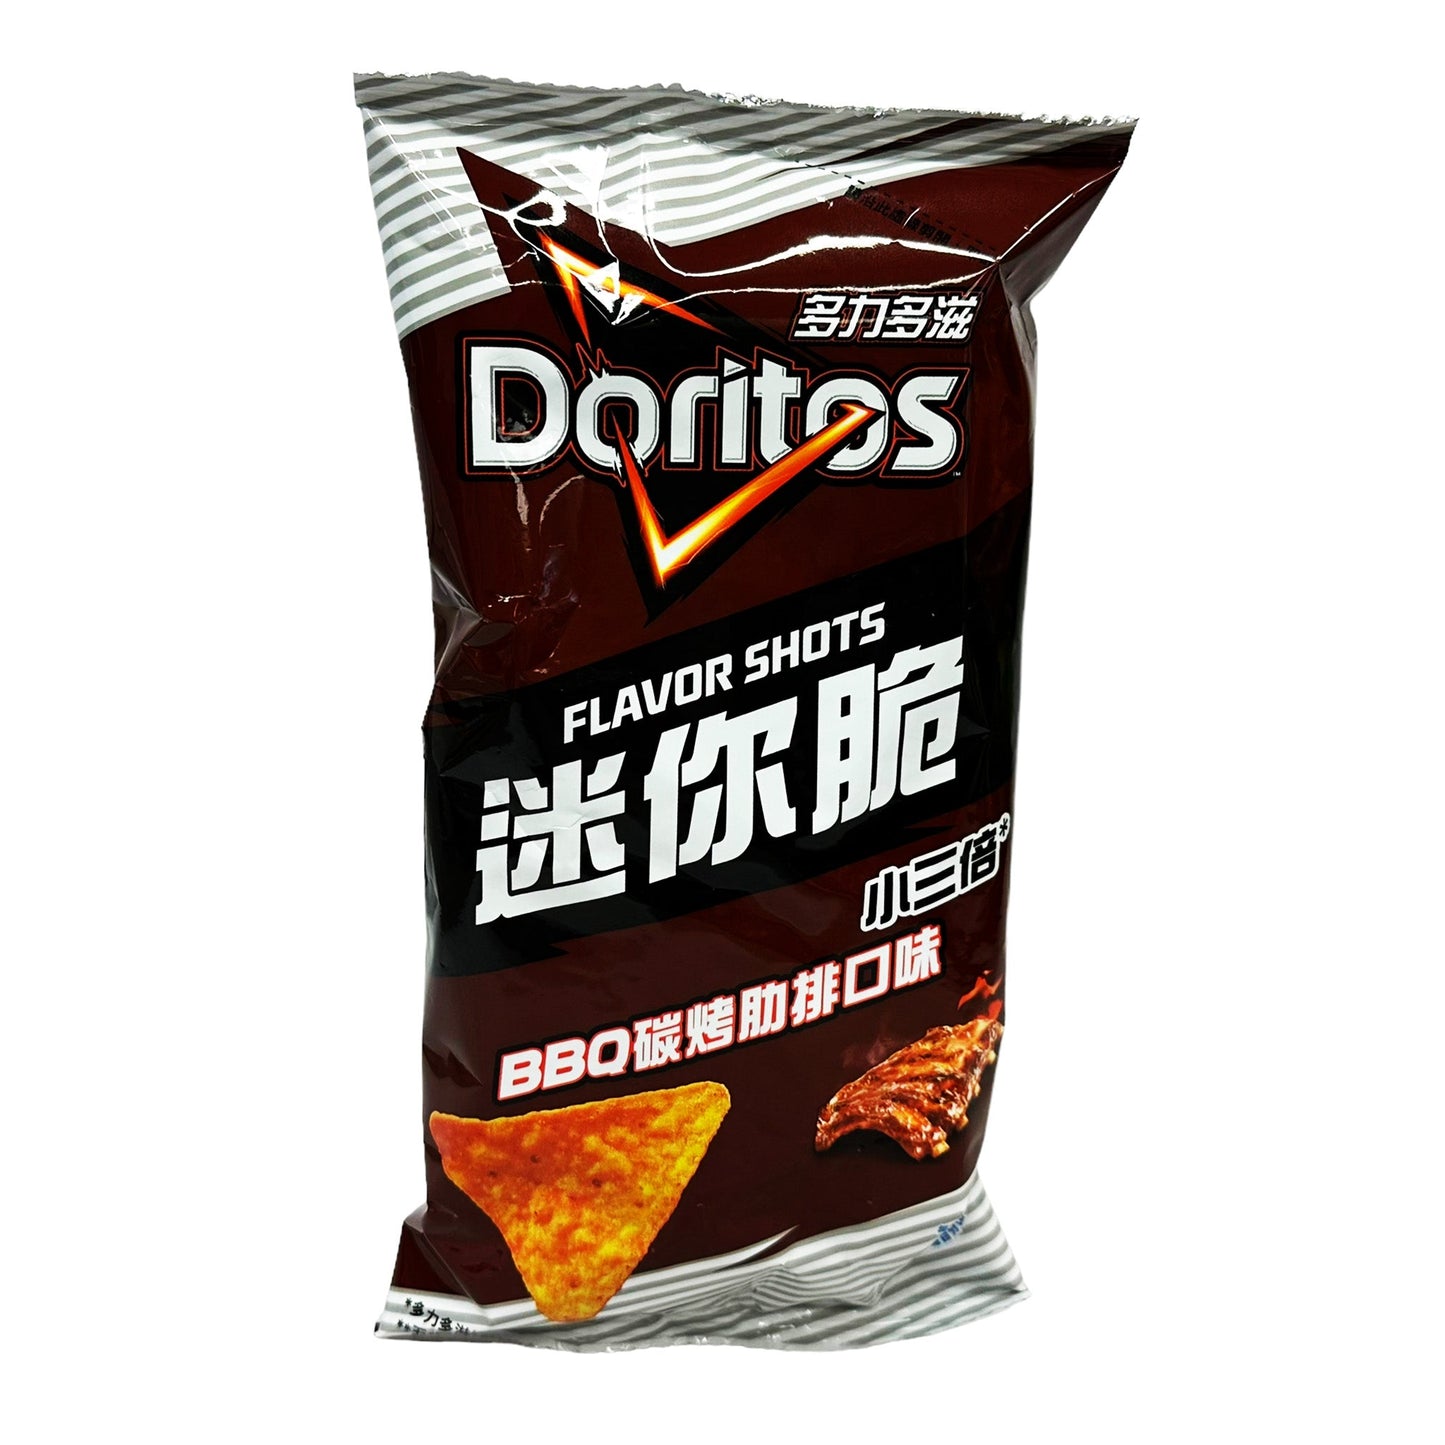 Doritos Flavor Shots Mini Chips - BBQ (27g) (China) 6-Pack